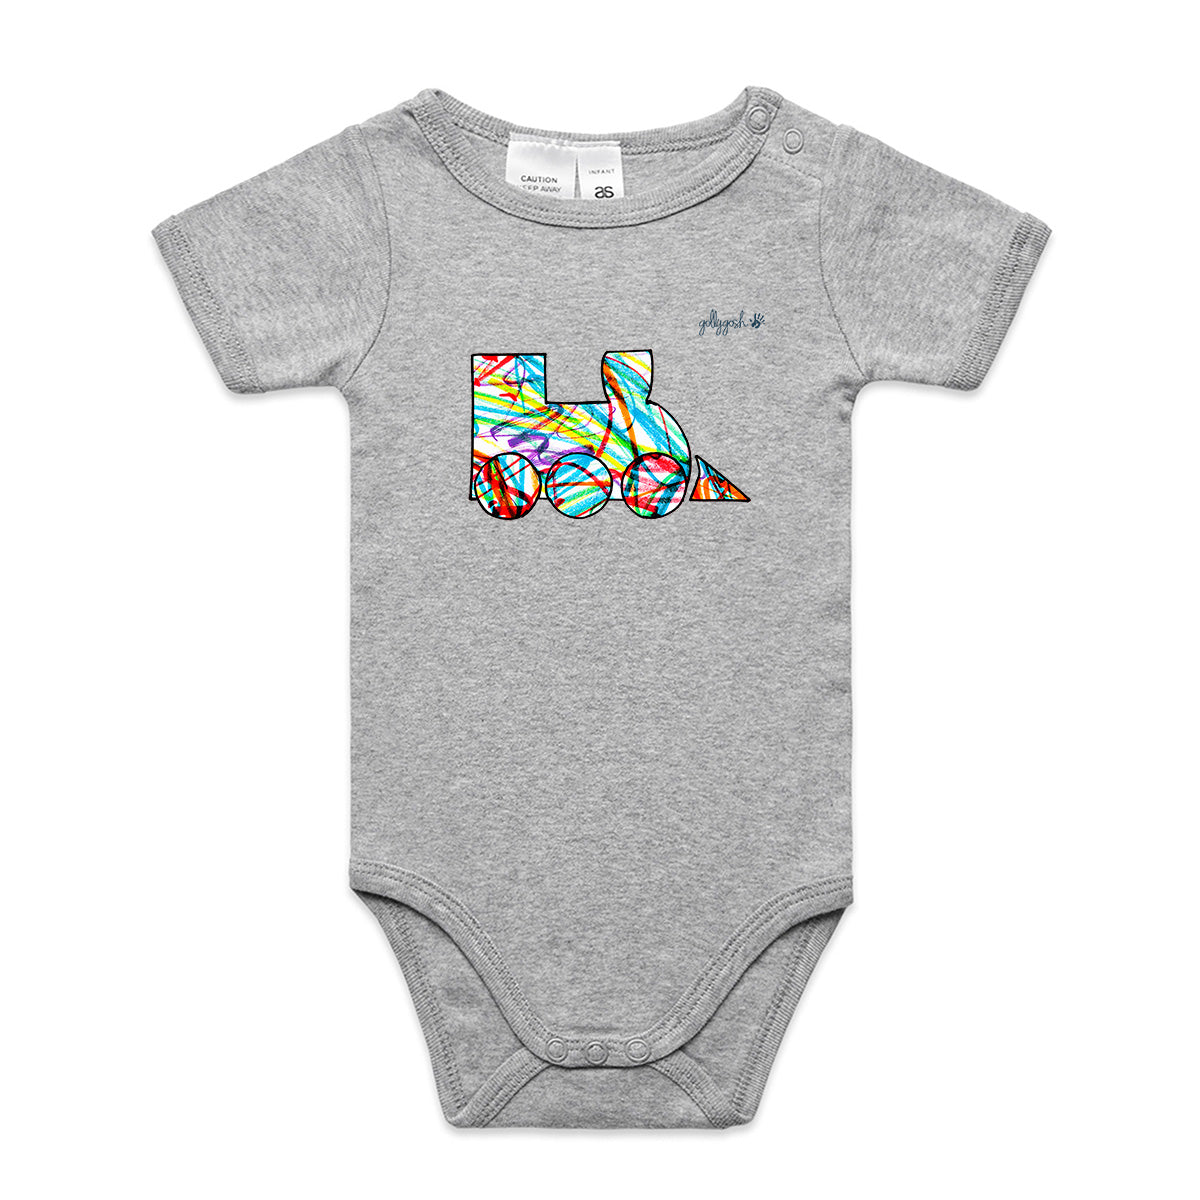 Train - Infant Baby Grow